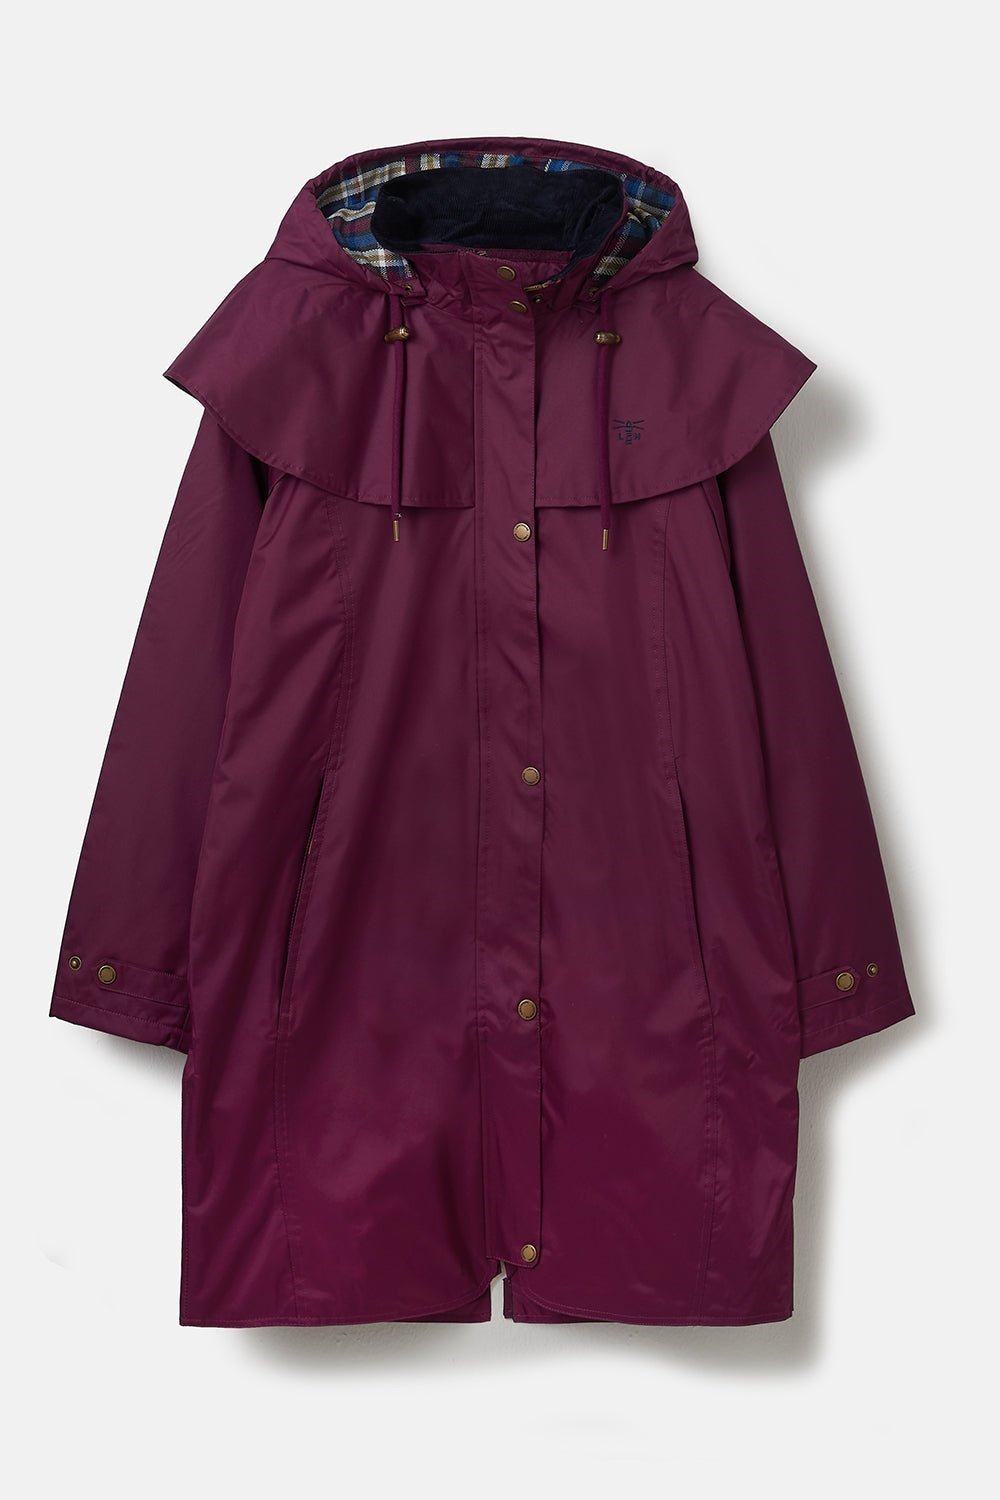 Outrider Womens 3/4 Length Waterproof Raincoat -